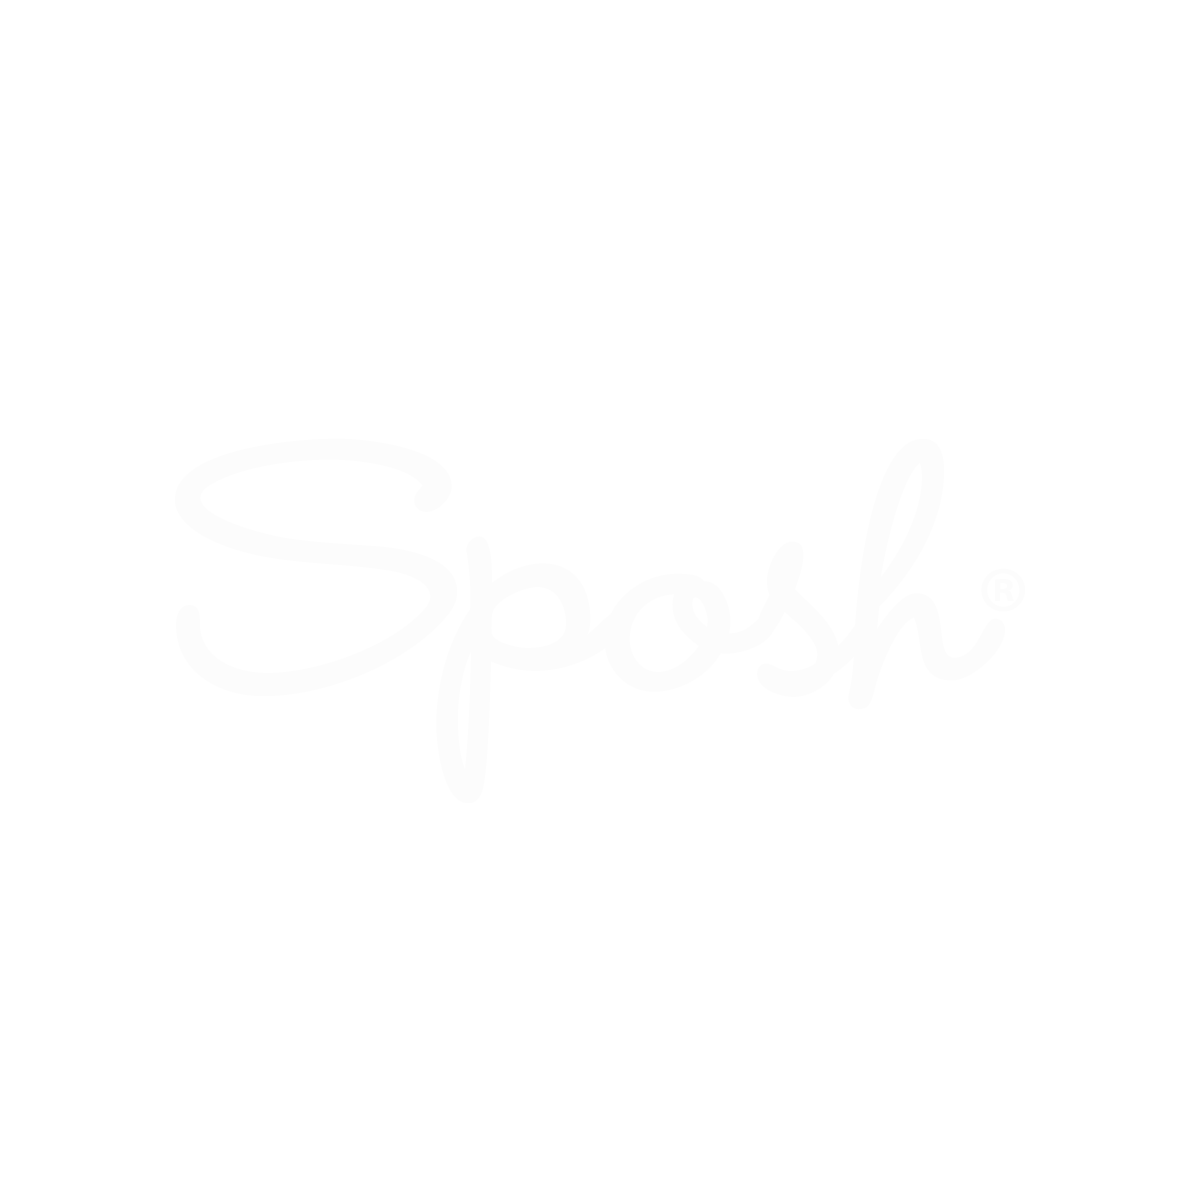 Sposh